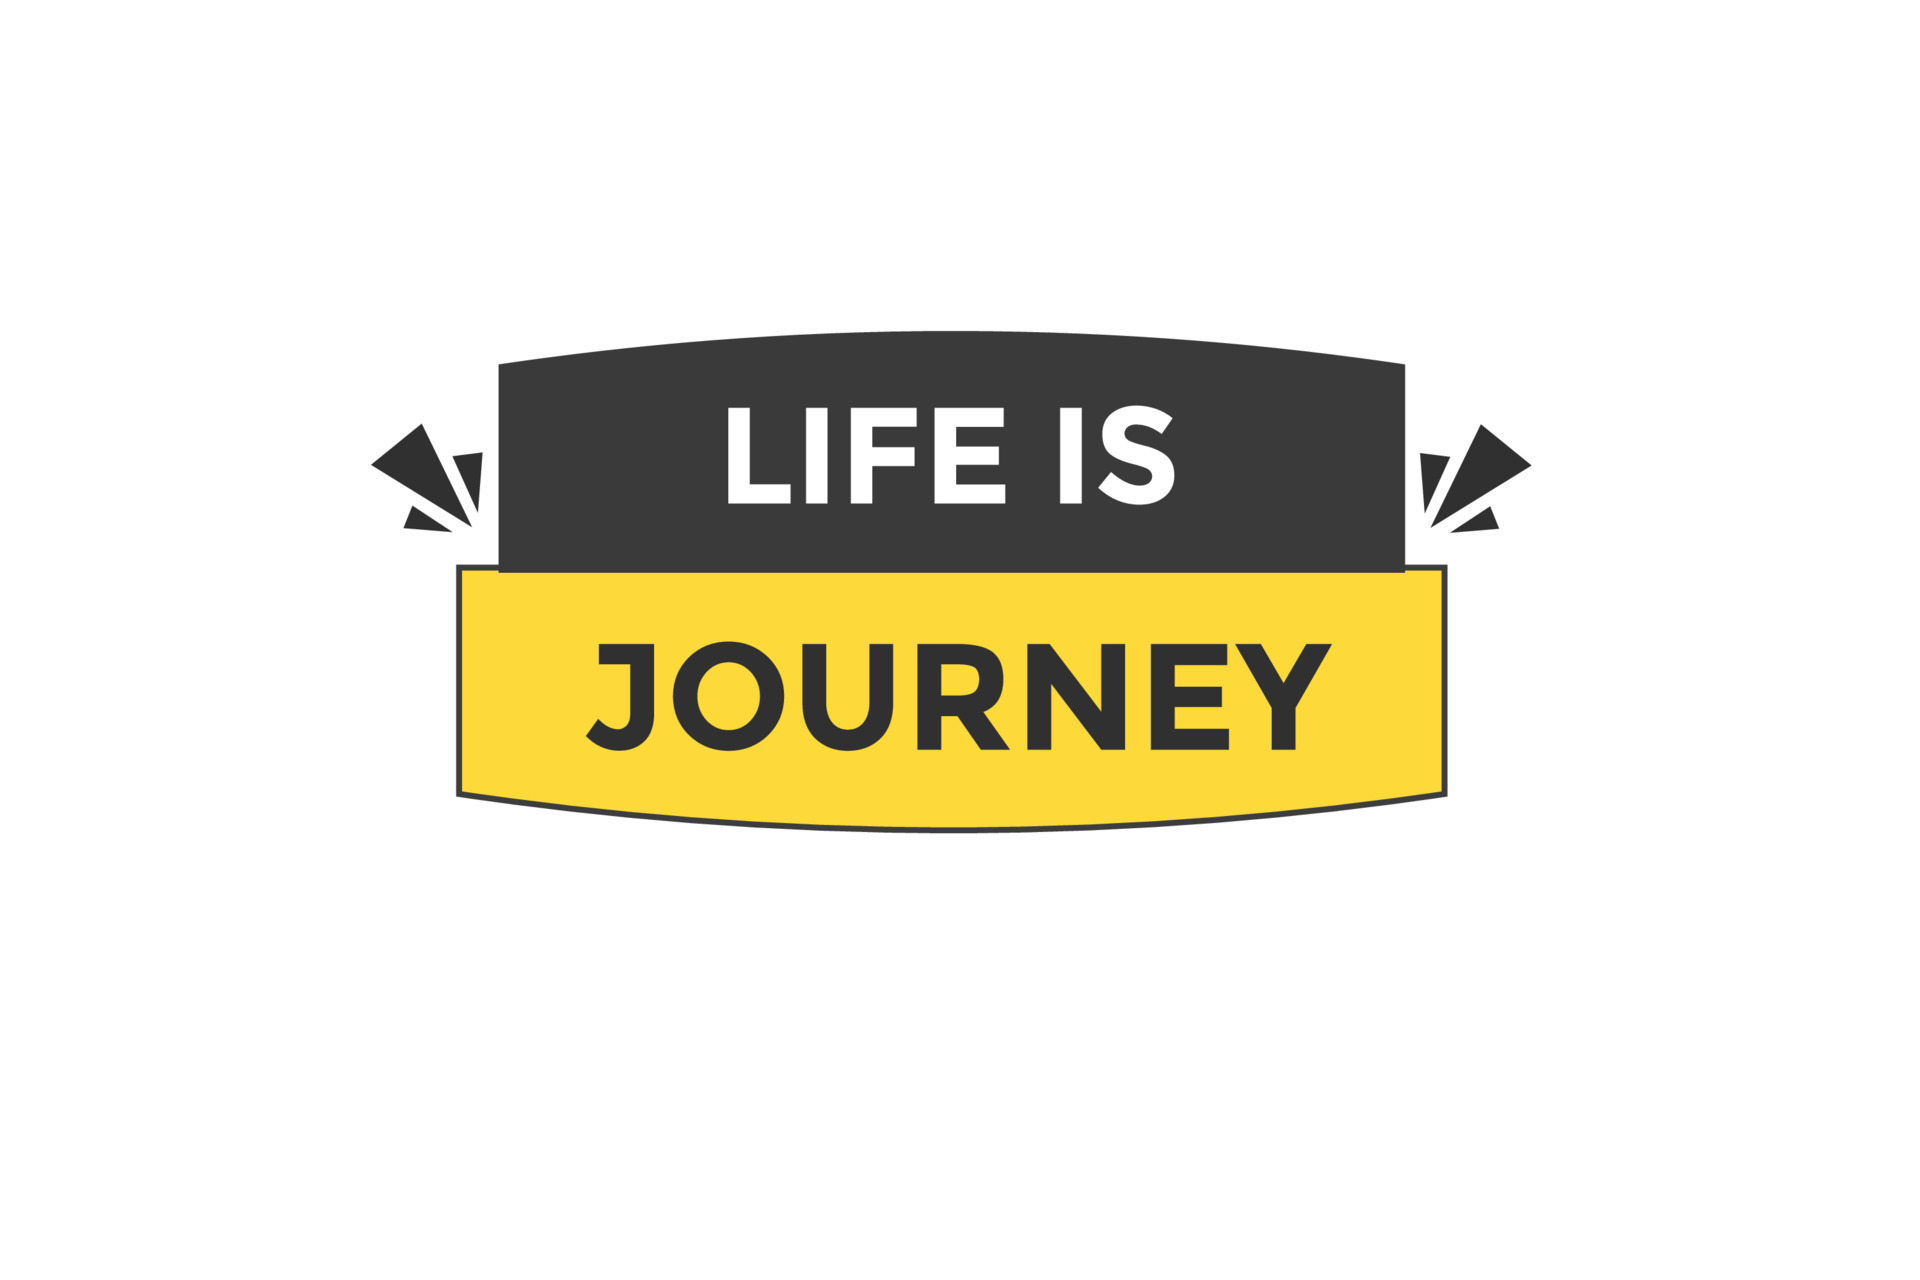 life is journey vectors.sign label bubble speech life is journey ...